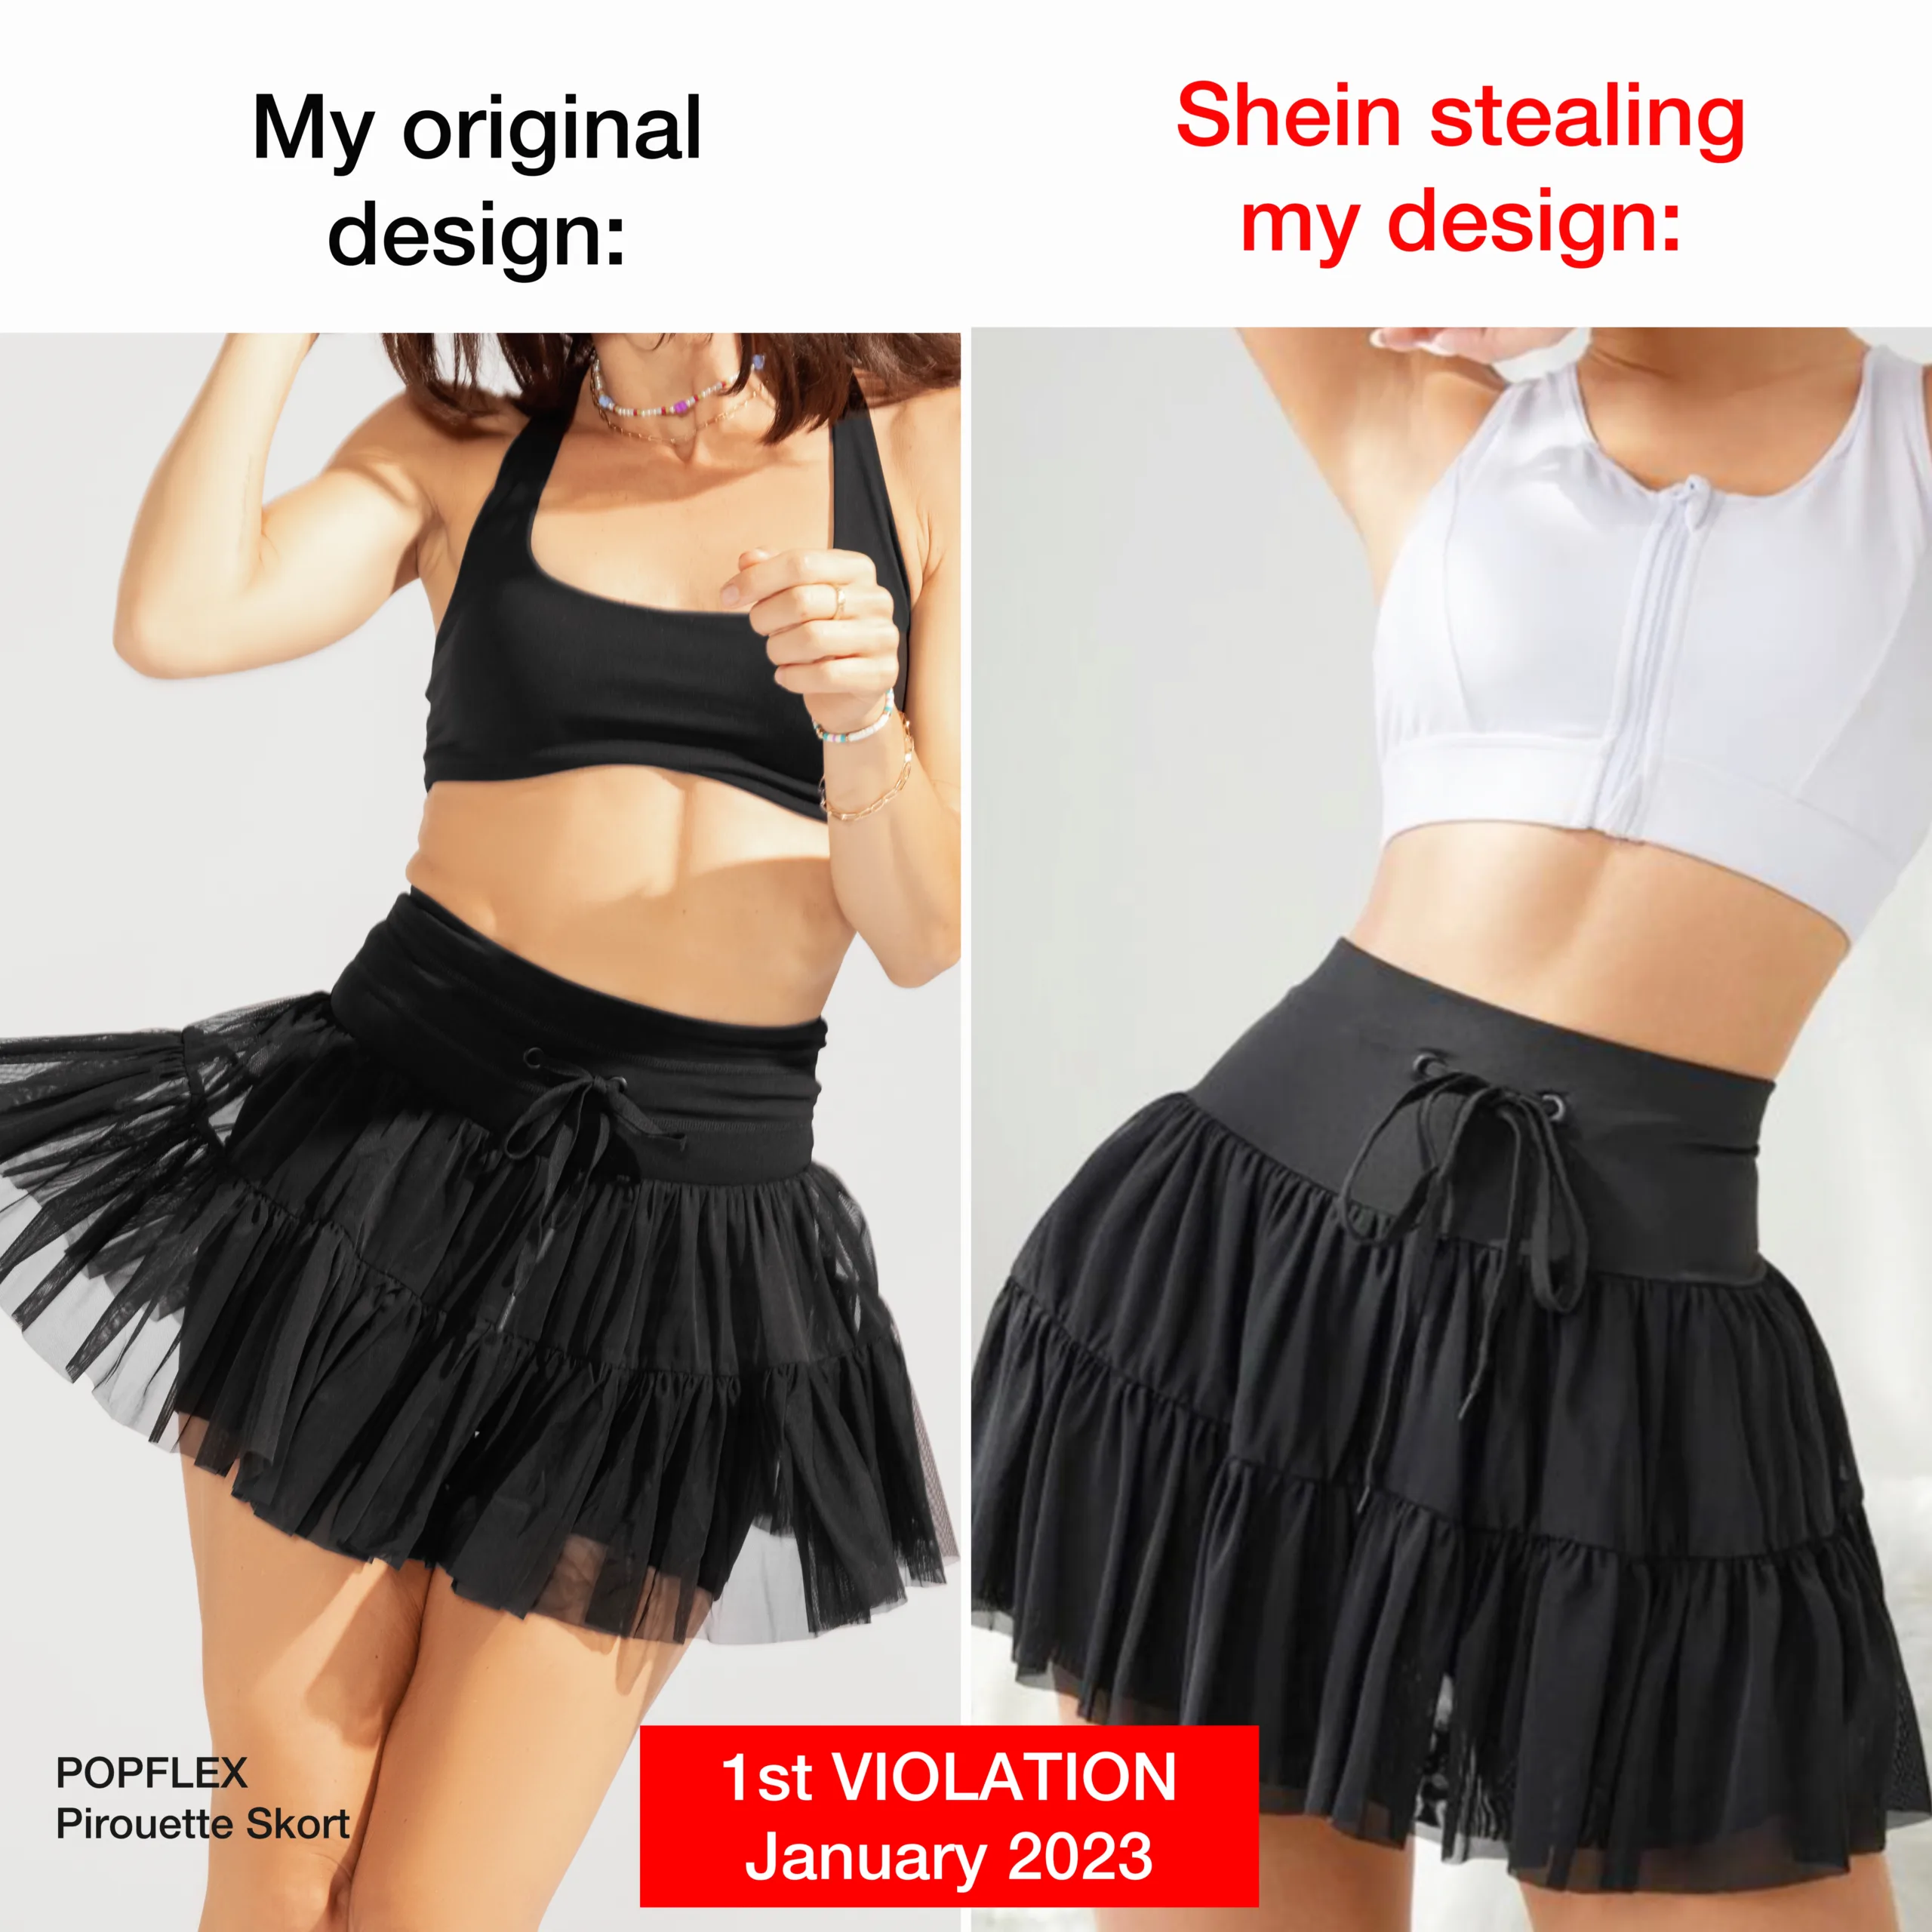 side by side comparison of listing modeling popflex pirouette skort and stolen design shein